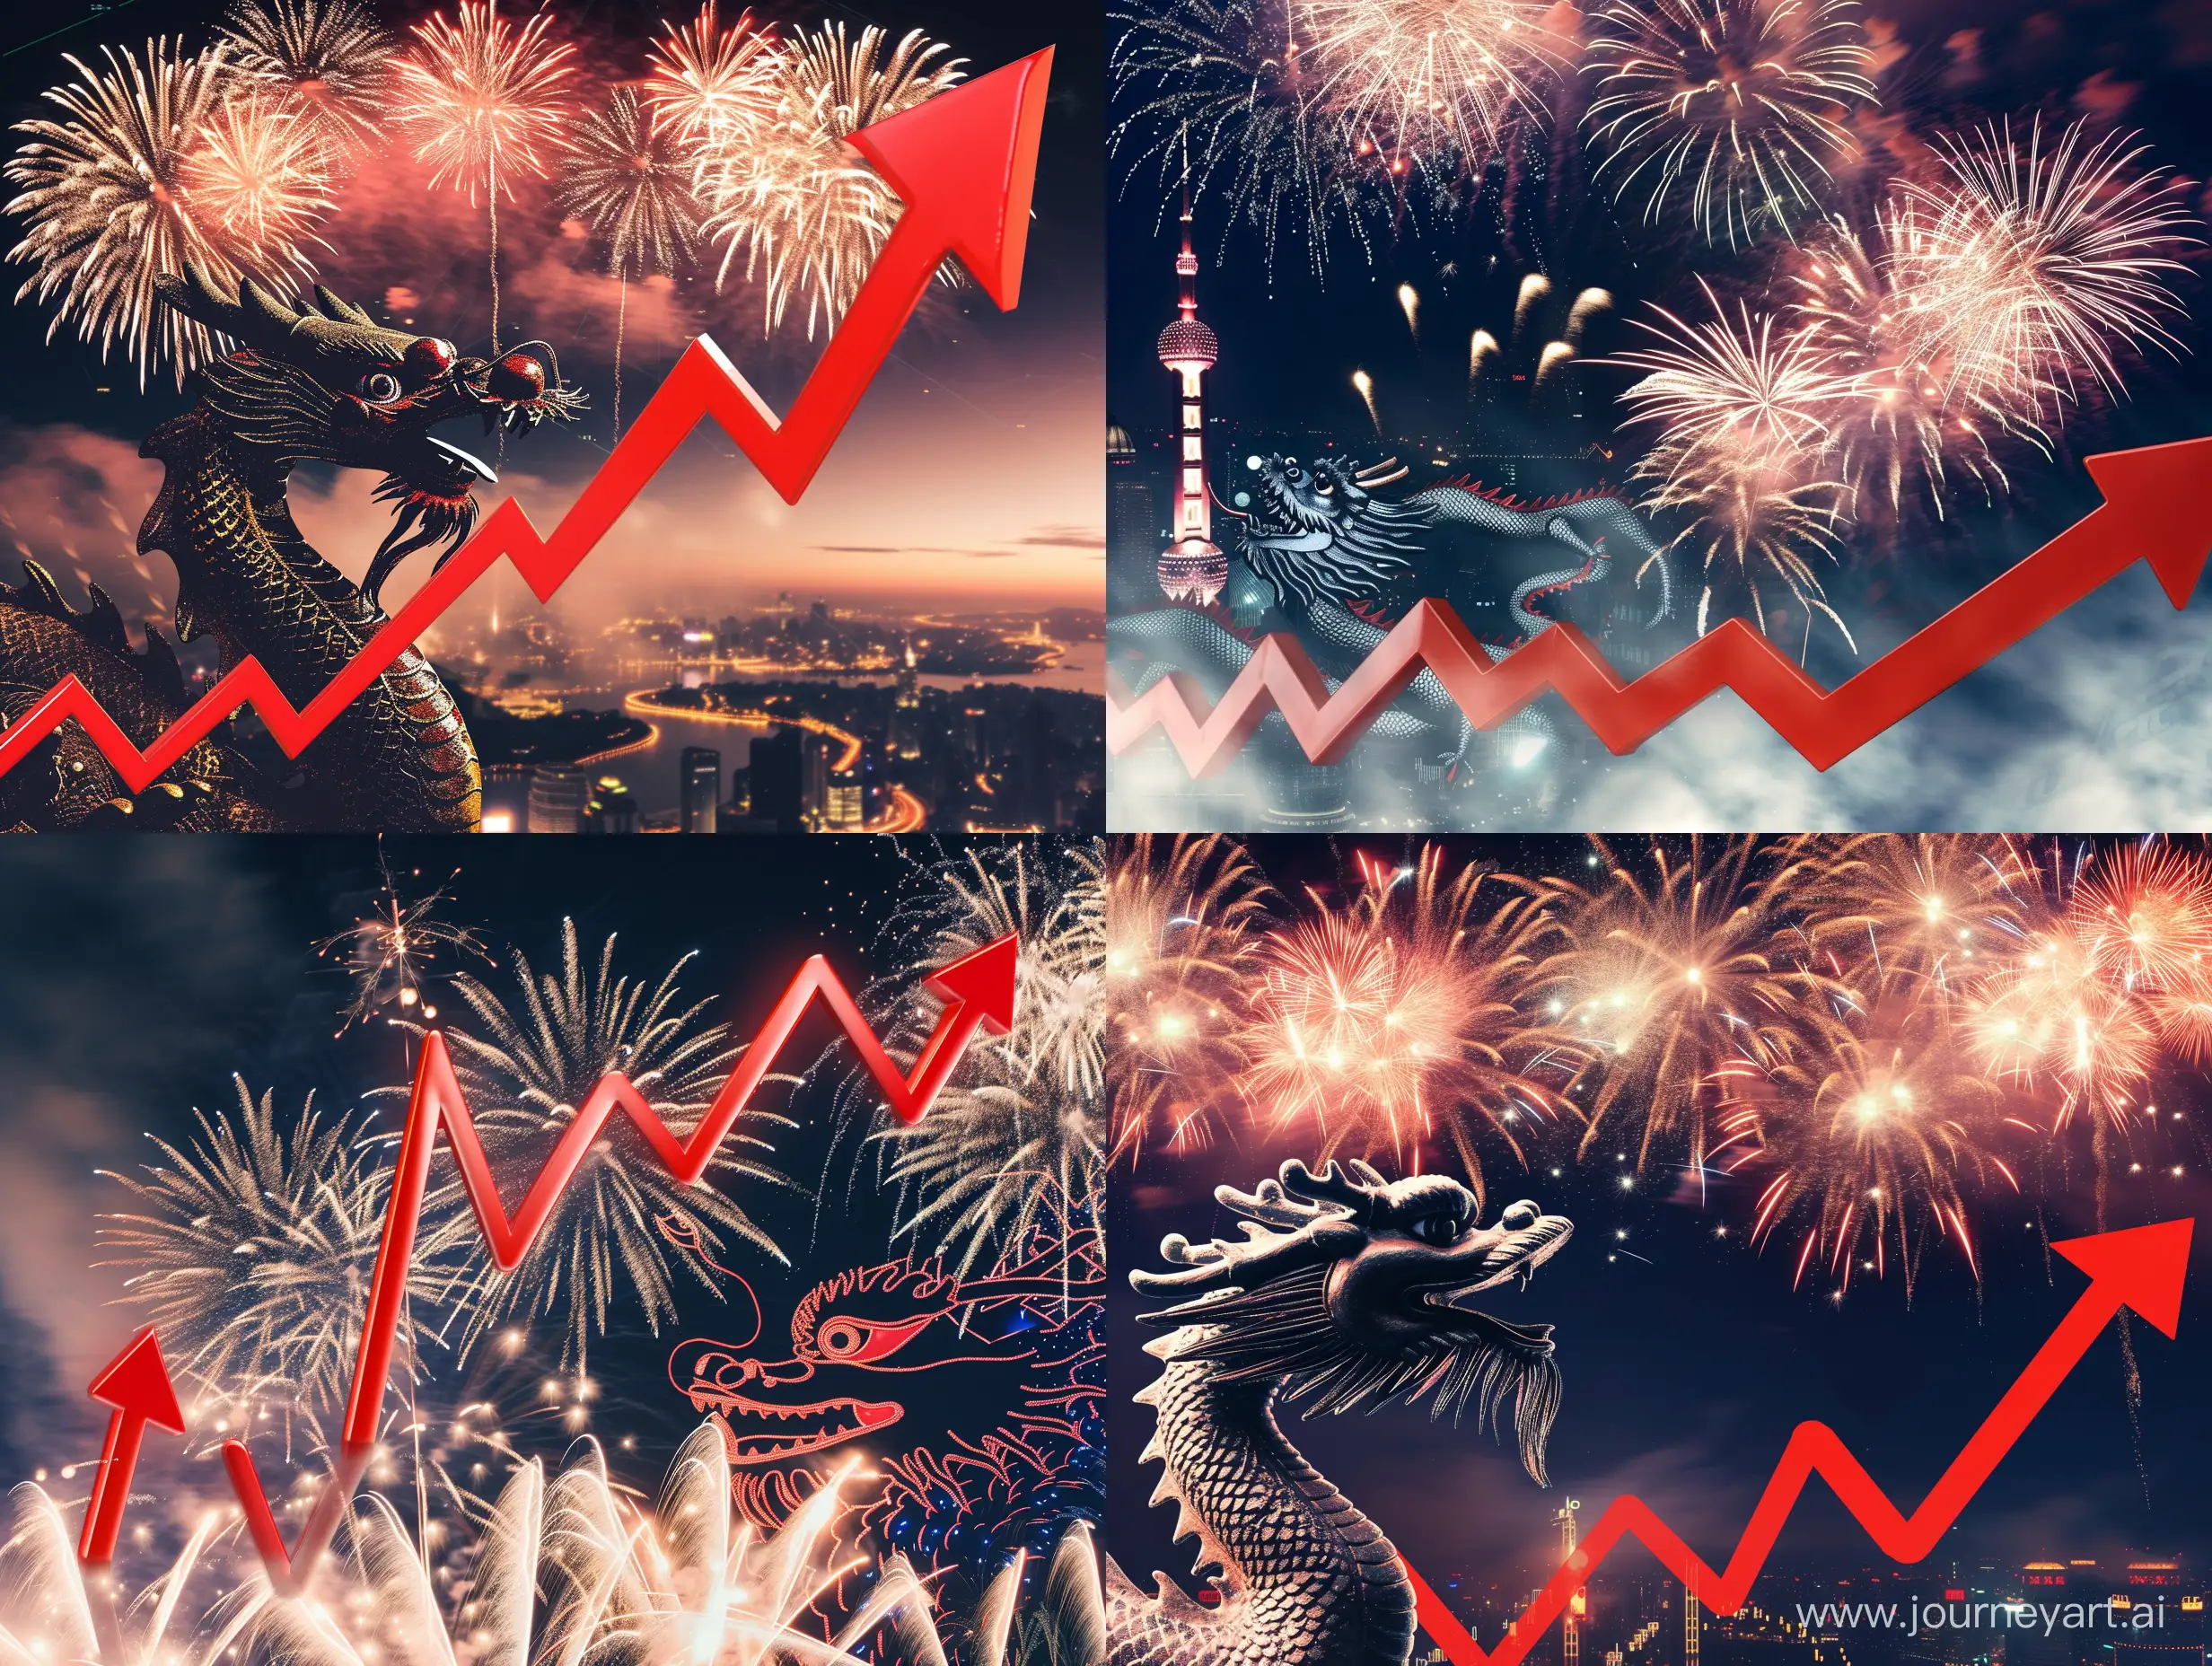 Fireworks, Chinese dragon, night sky background, rising stock trading chart, red upward arrow --v 6 --ar 4:3 --no 12512